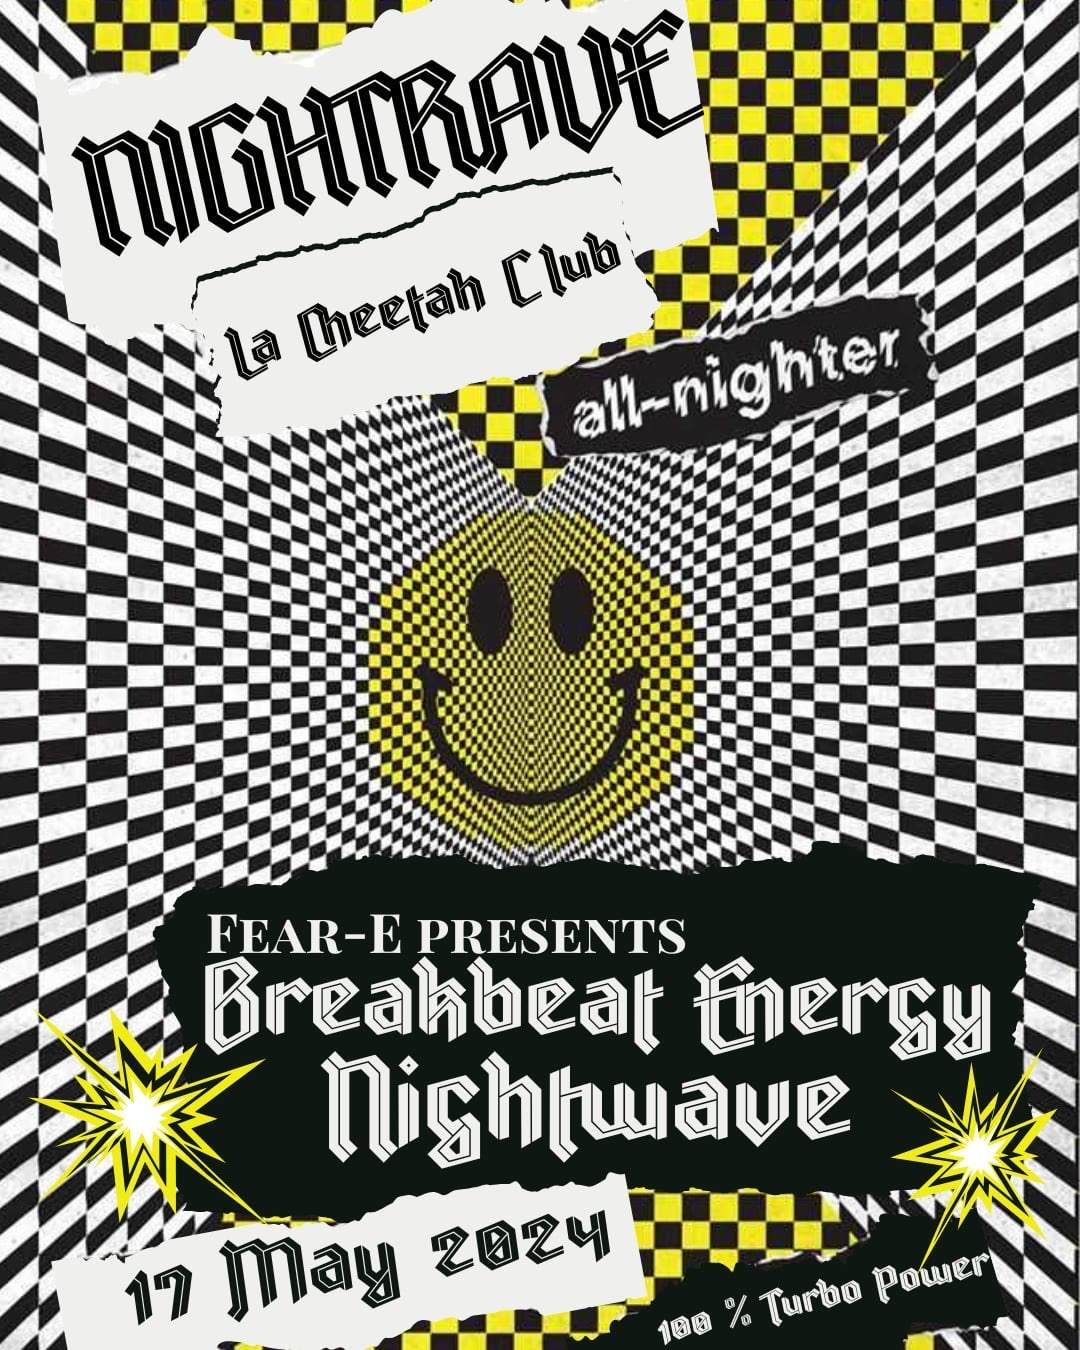 Nightrave with Nightwave & Breakbeat Energy - フライヤー表